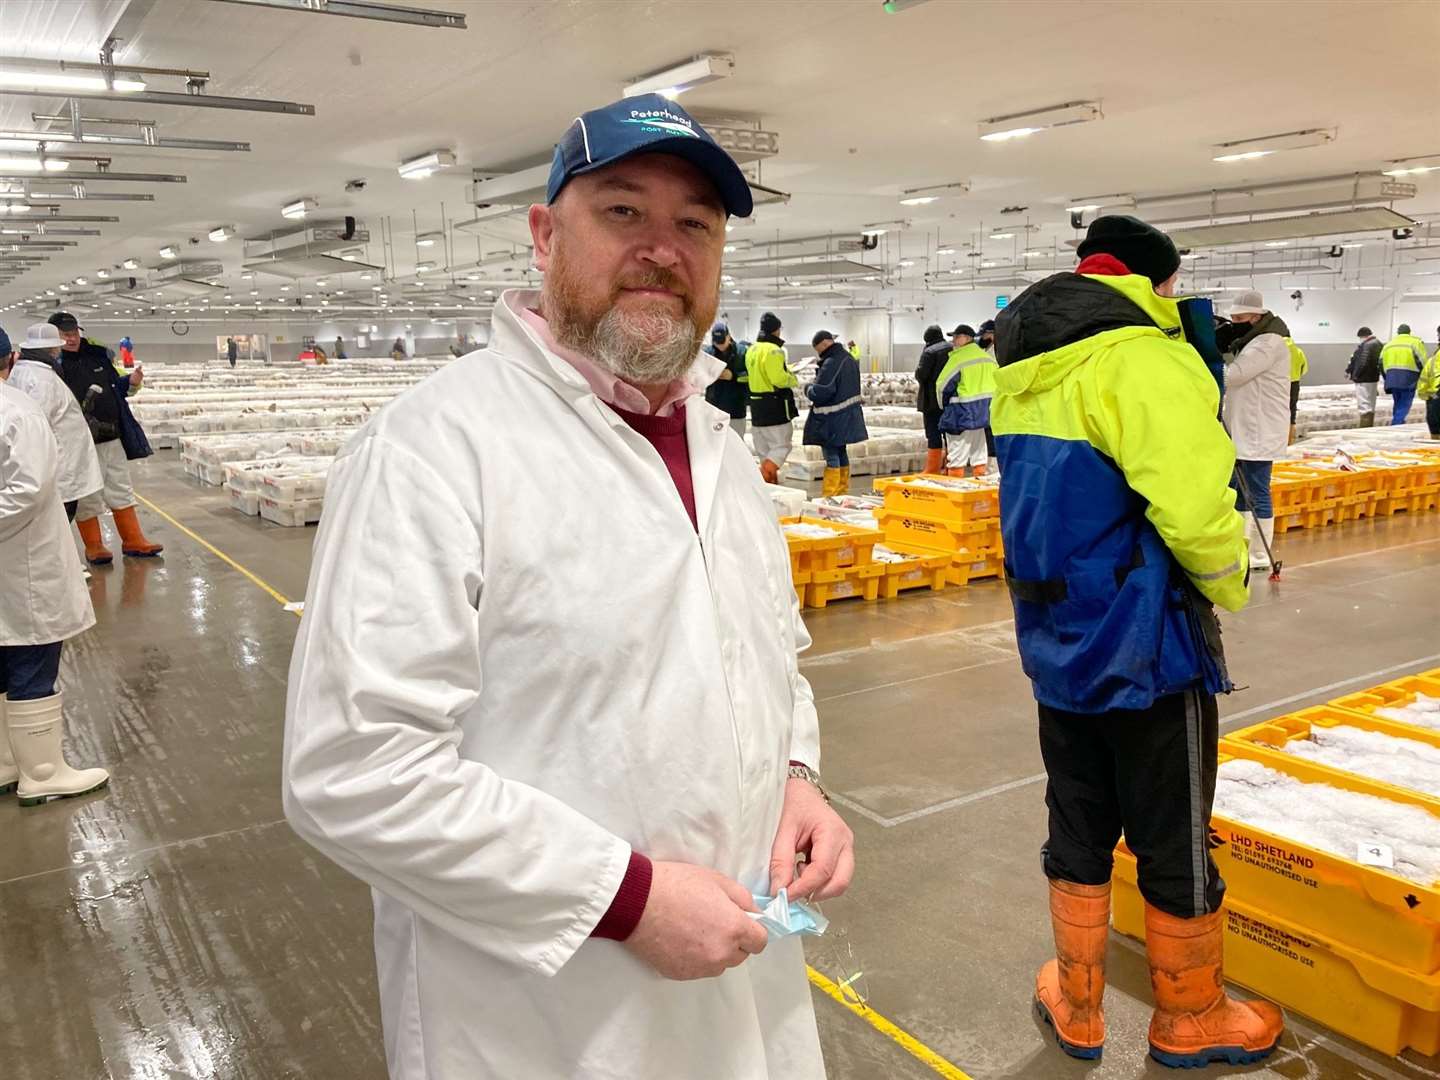 MP David Duguid pictured at Peterhead Fish Market